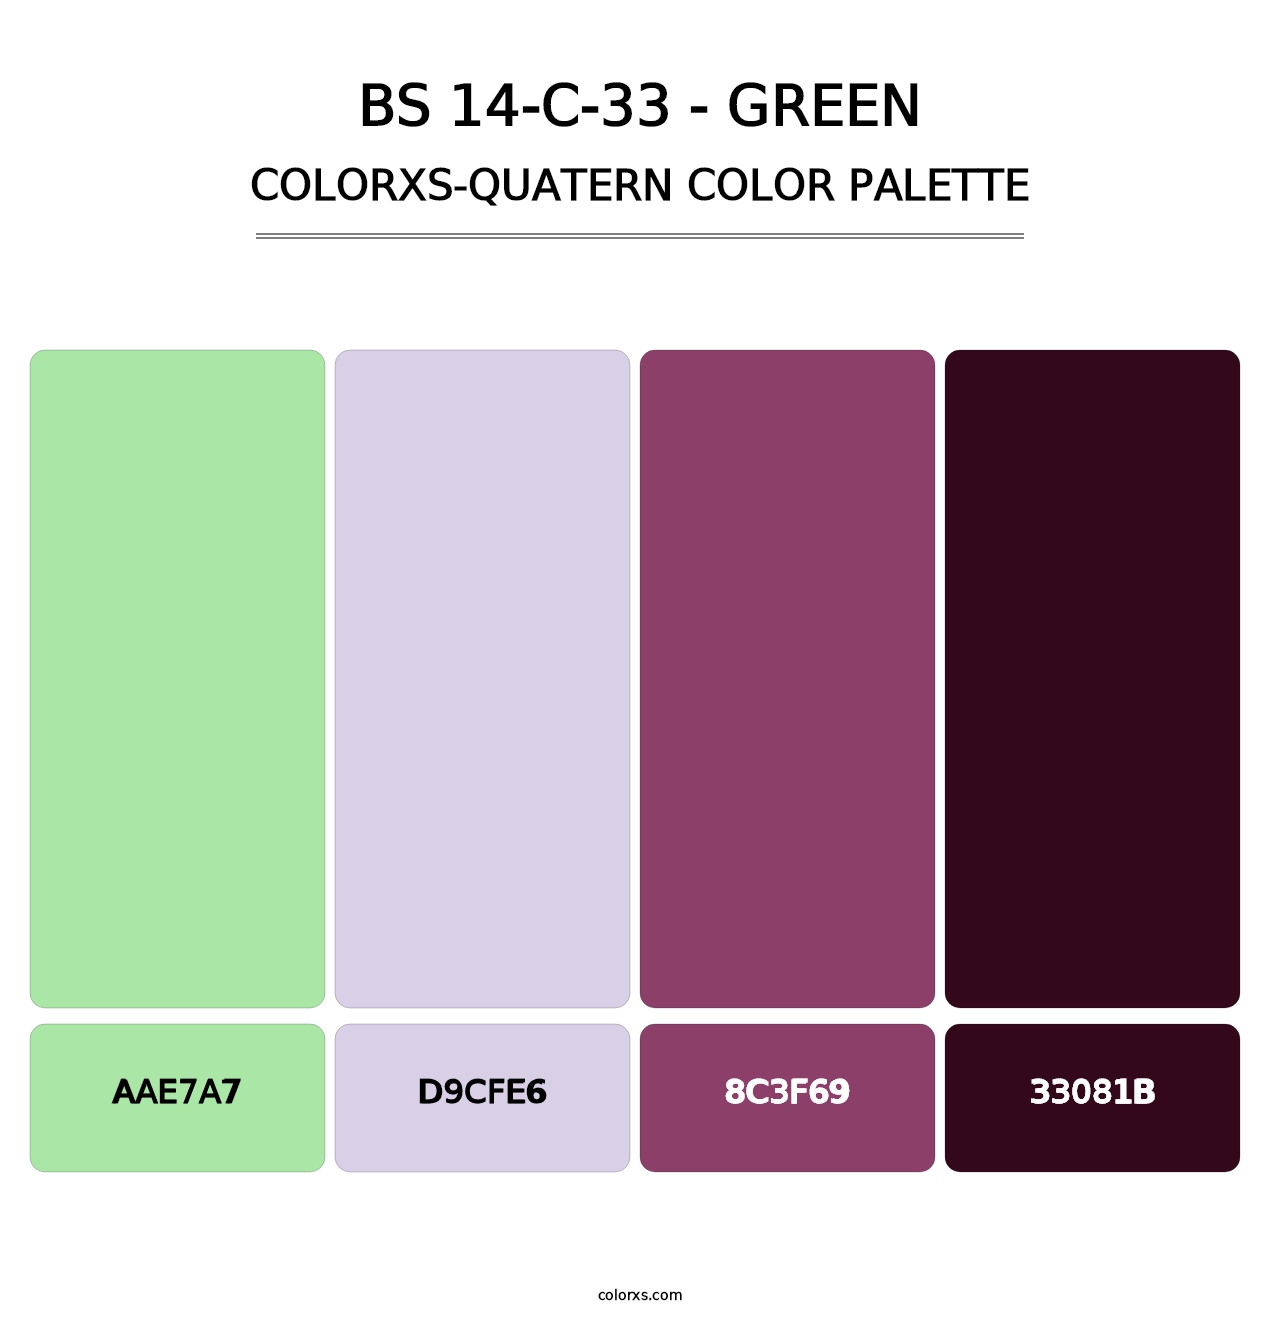 BS 14-C-33 - Green - Colorxs Quatern Palette